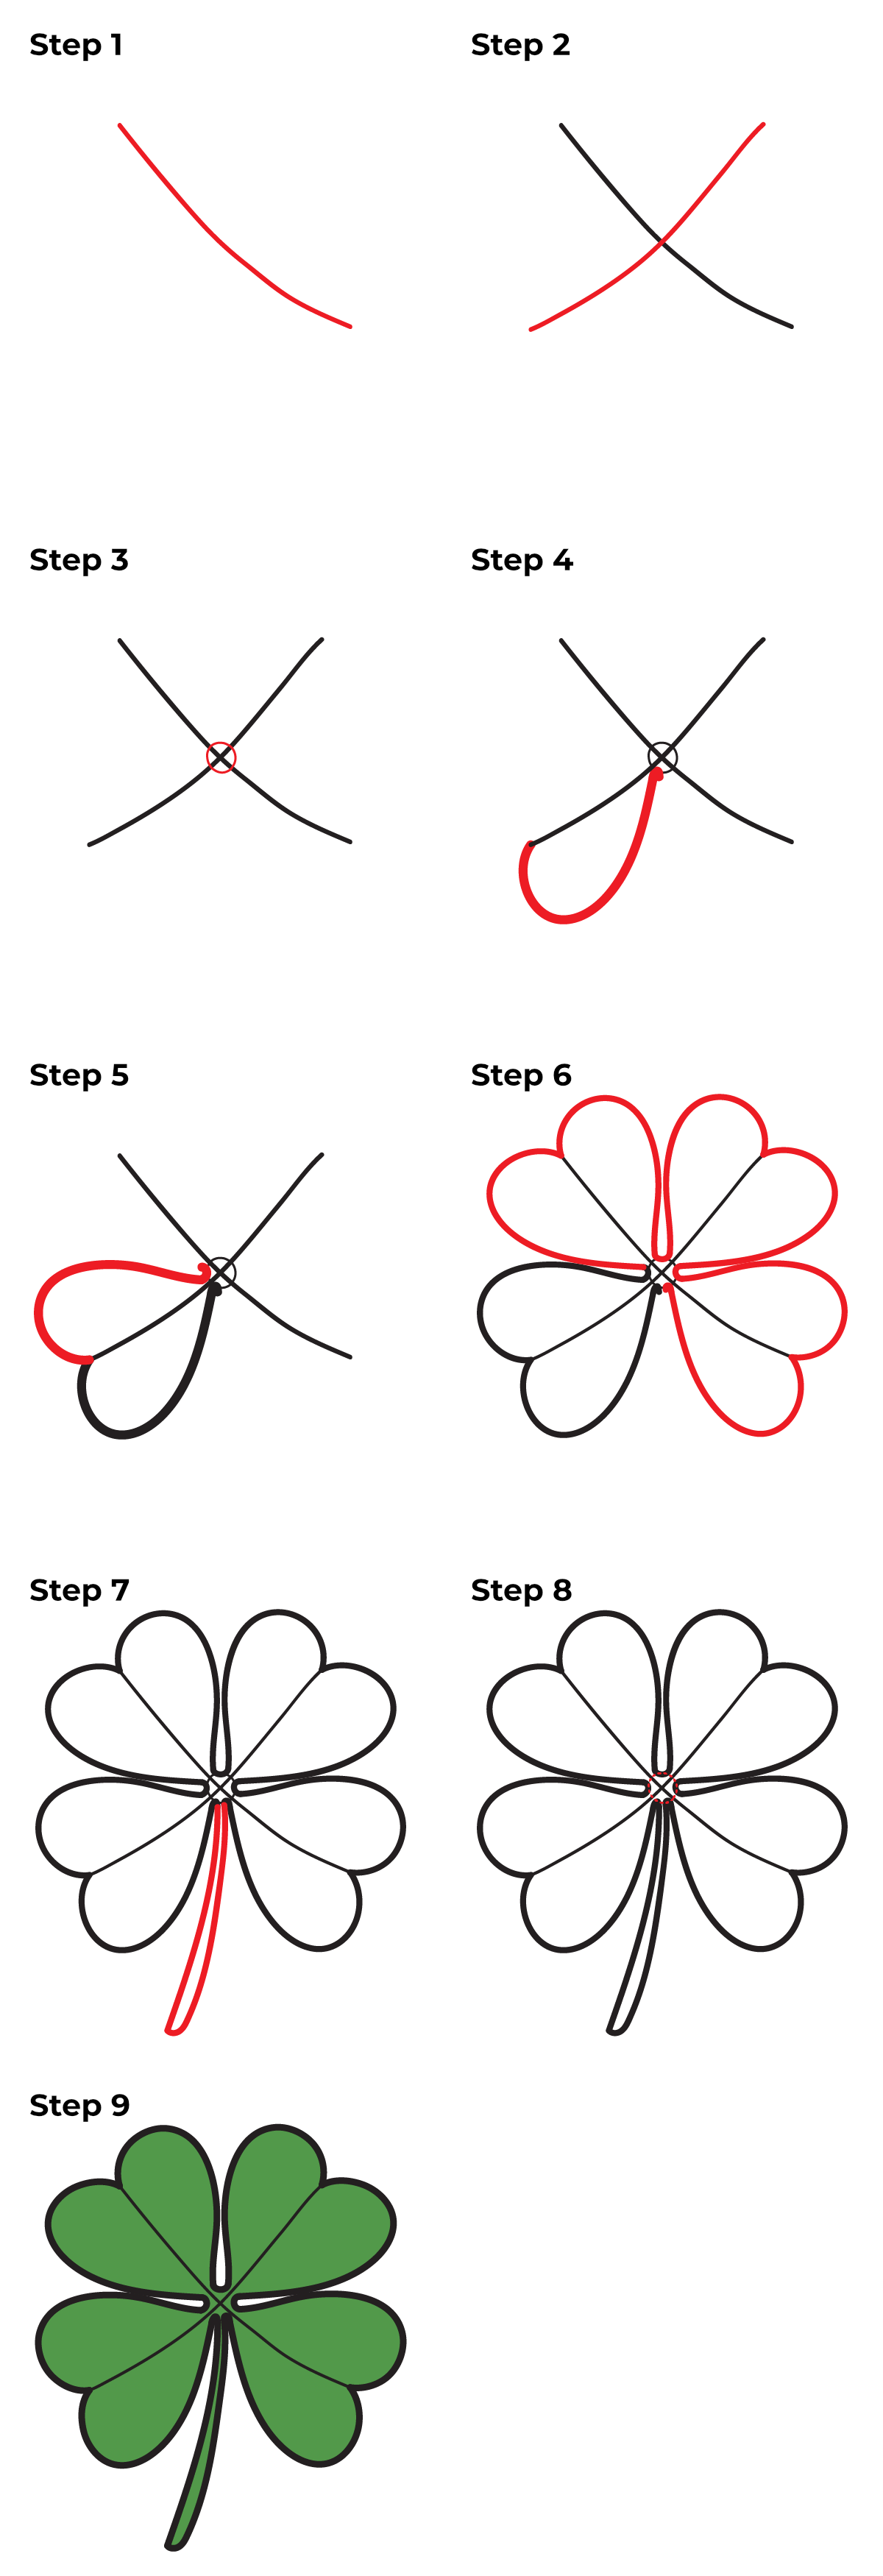 How to Draw a Four Leaf Clover